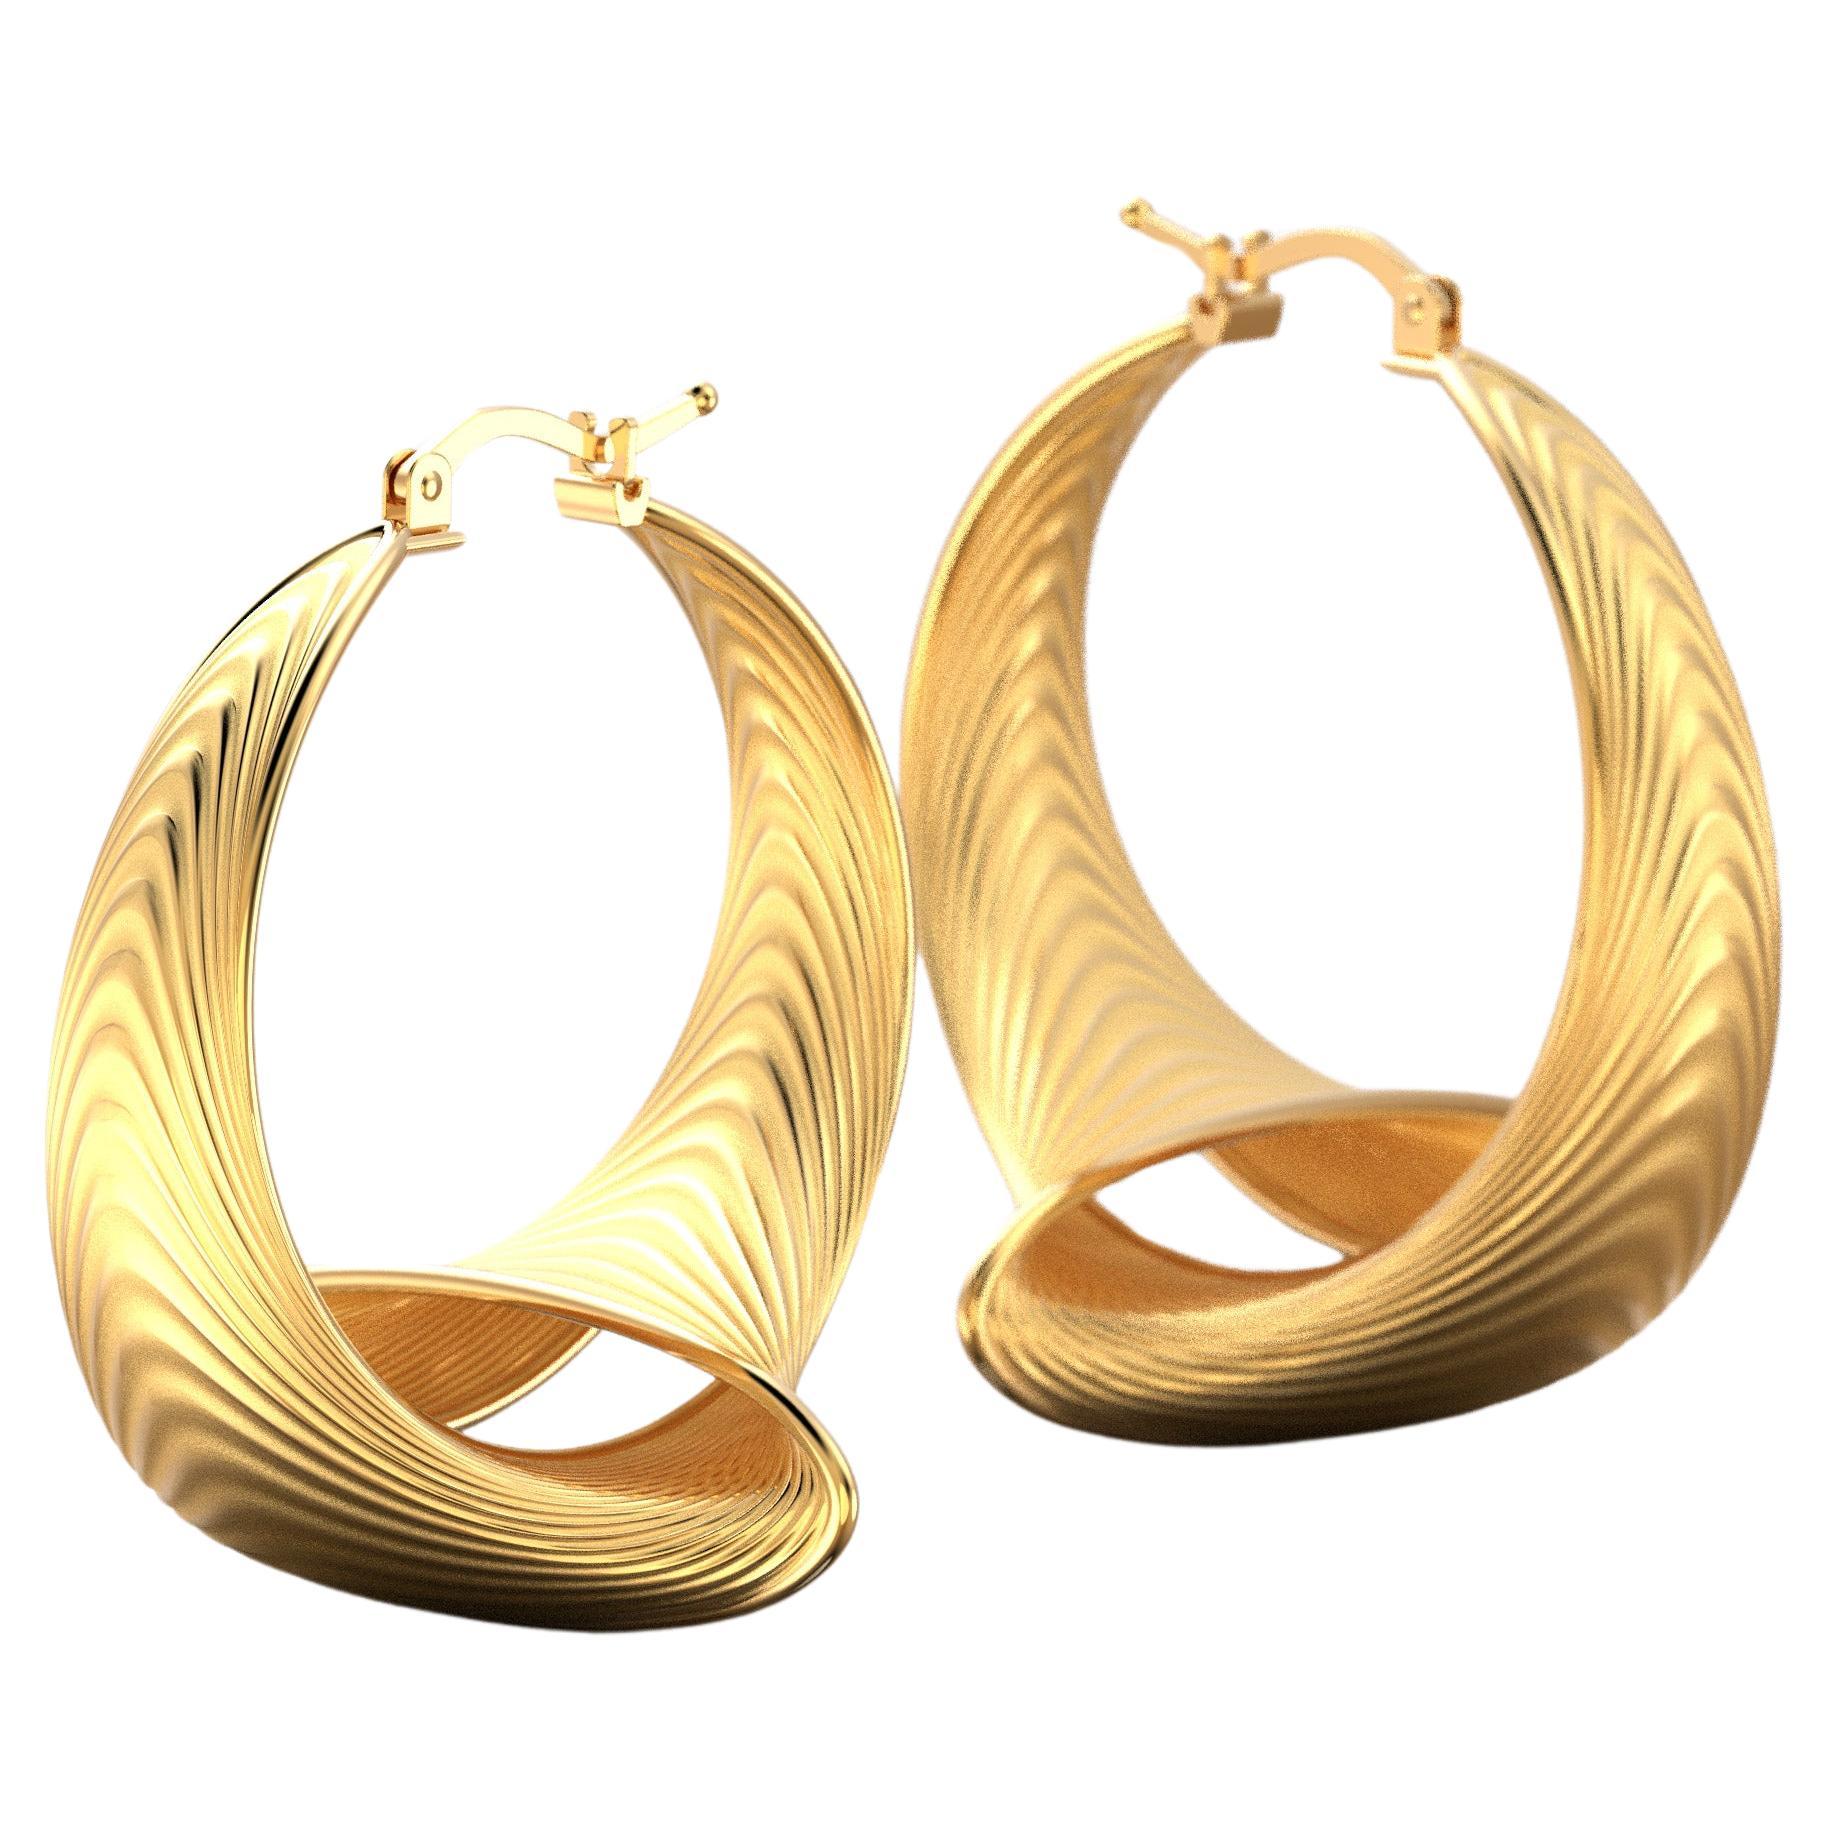 Modern  Oltremare Gioielli 14k Gold Hoop Earrings Made in Italy, Italian Fine Jewelry  For Sale